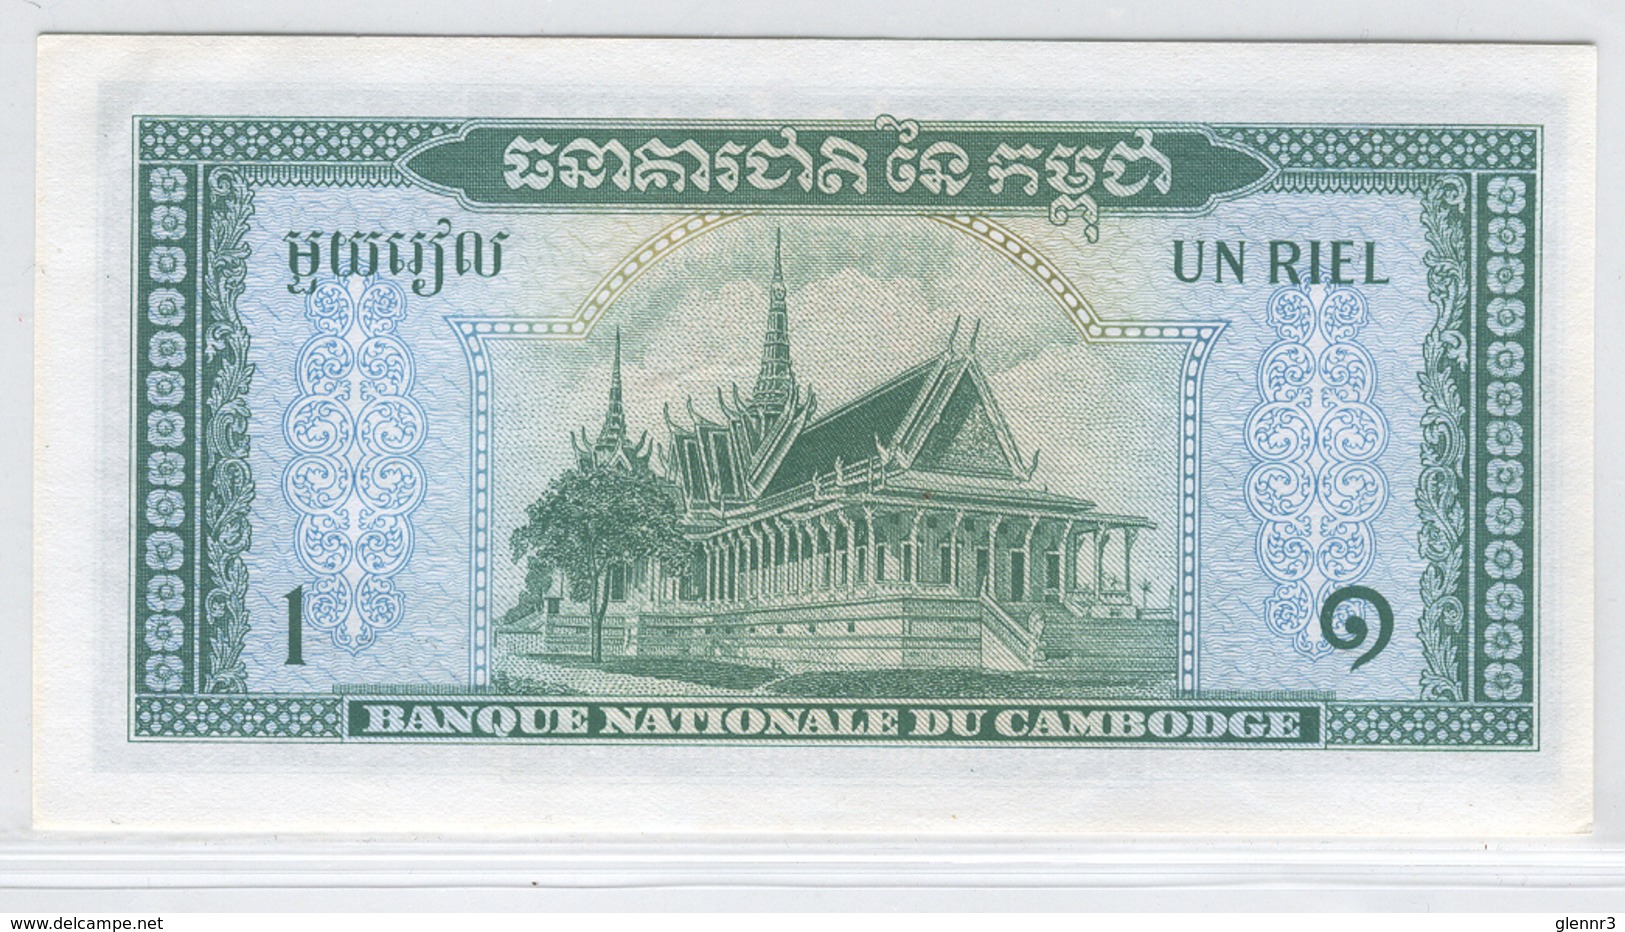 CAMBODIA 4c 1972 1 Riel UNC - Cambodia